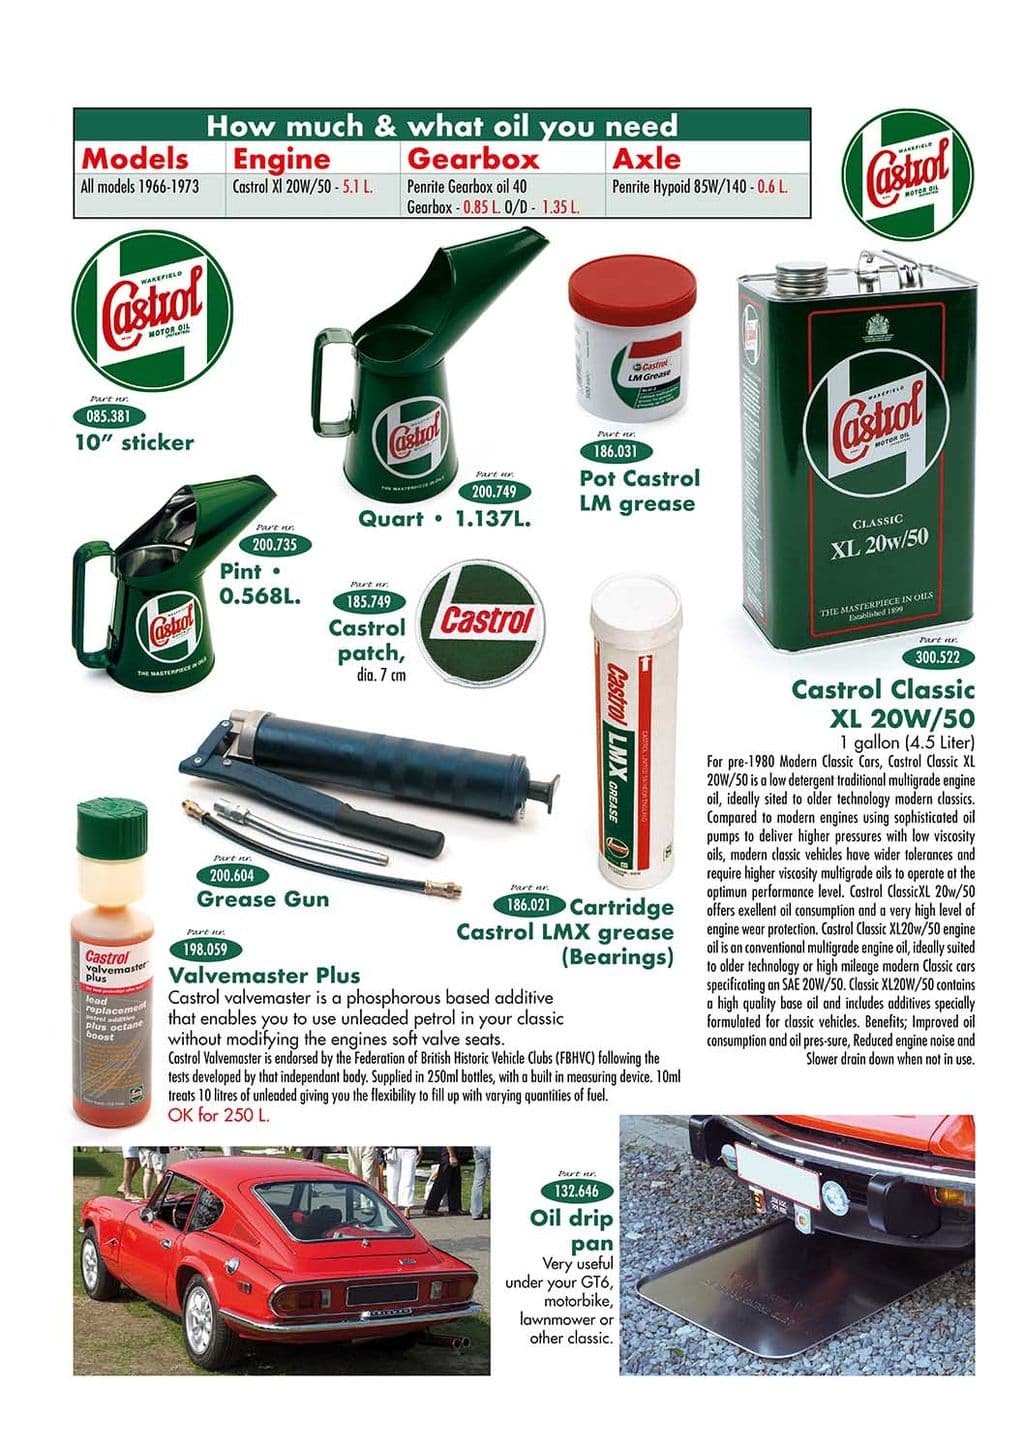 Oil cans & drip pan - odkapávací plato - Údržba & skladování - Jaguar XJ6-12 / Daimler Sovereign, D6 1968-'92 - Oil cans & drip pan - 1